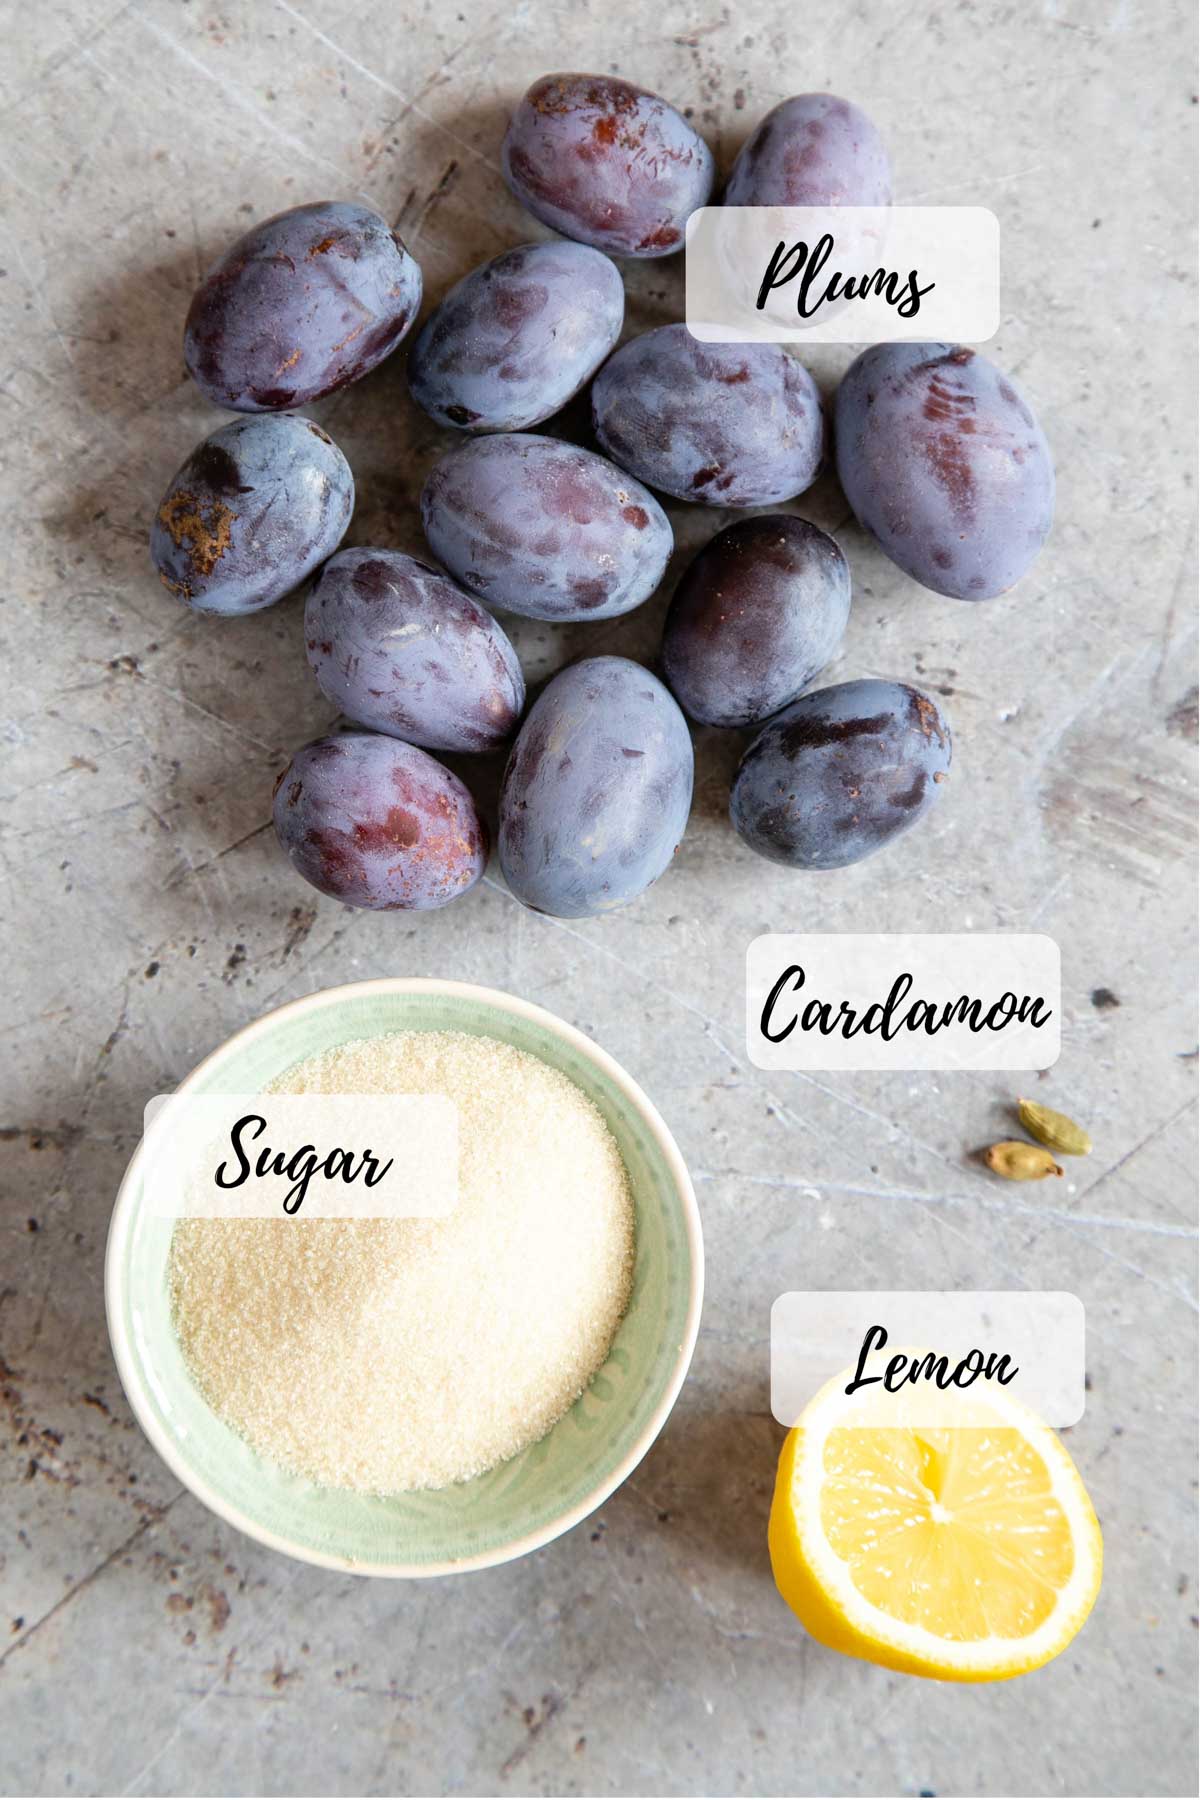 Plum compote ingredients: plums, lemon, sugar, and cardamon seeds.